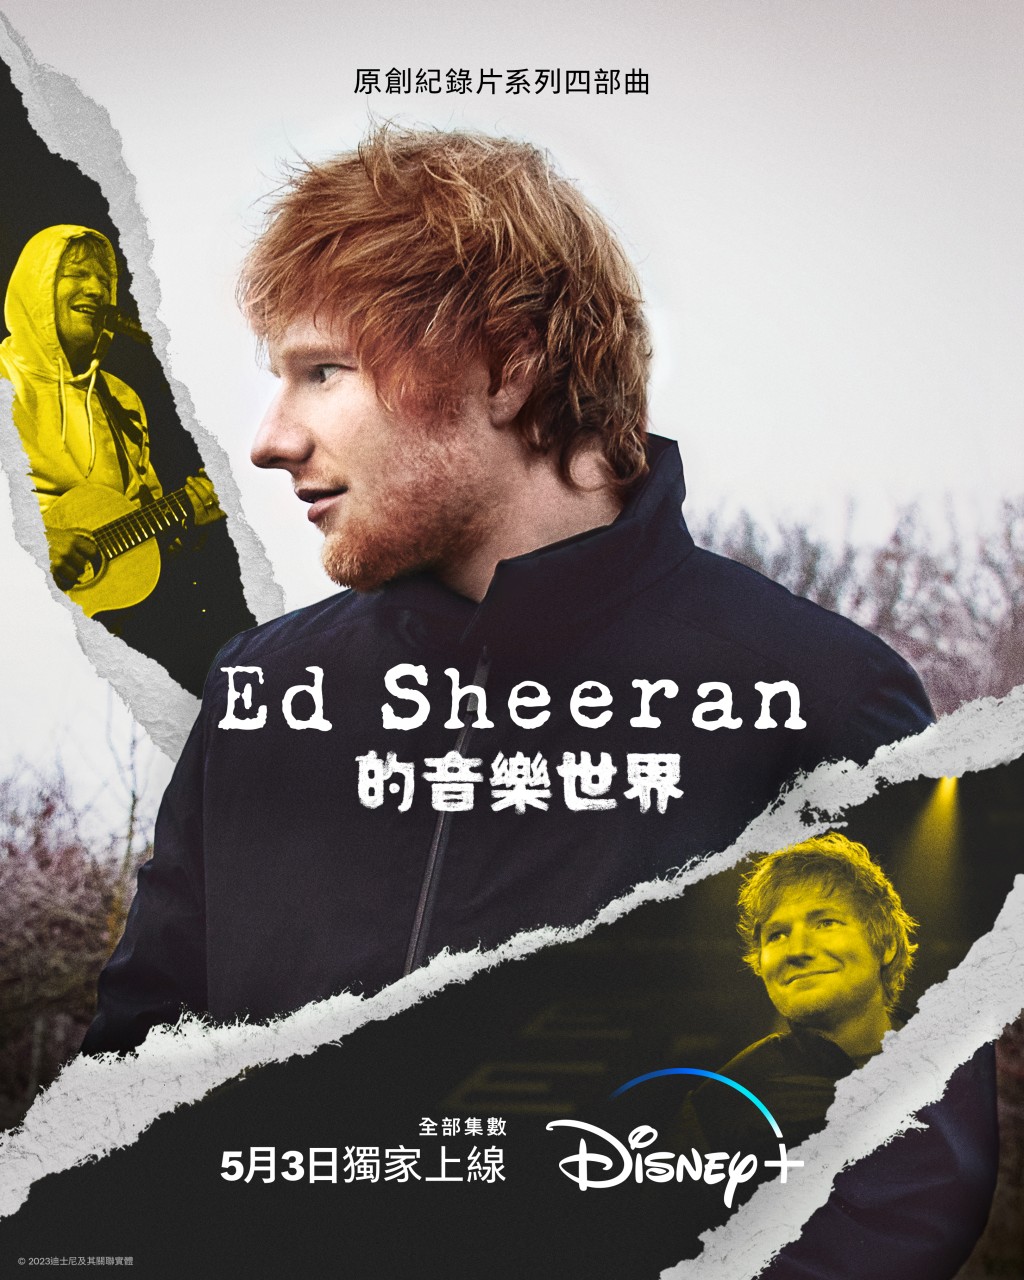 Disney+ 原创音乐纪录片系列《Ed Sheeran的音乐世界》